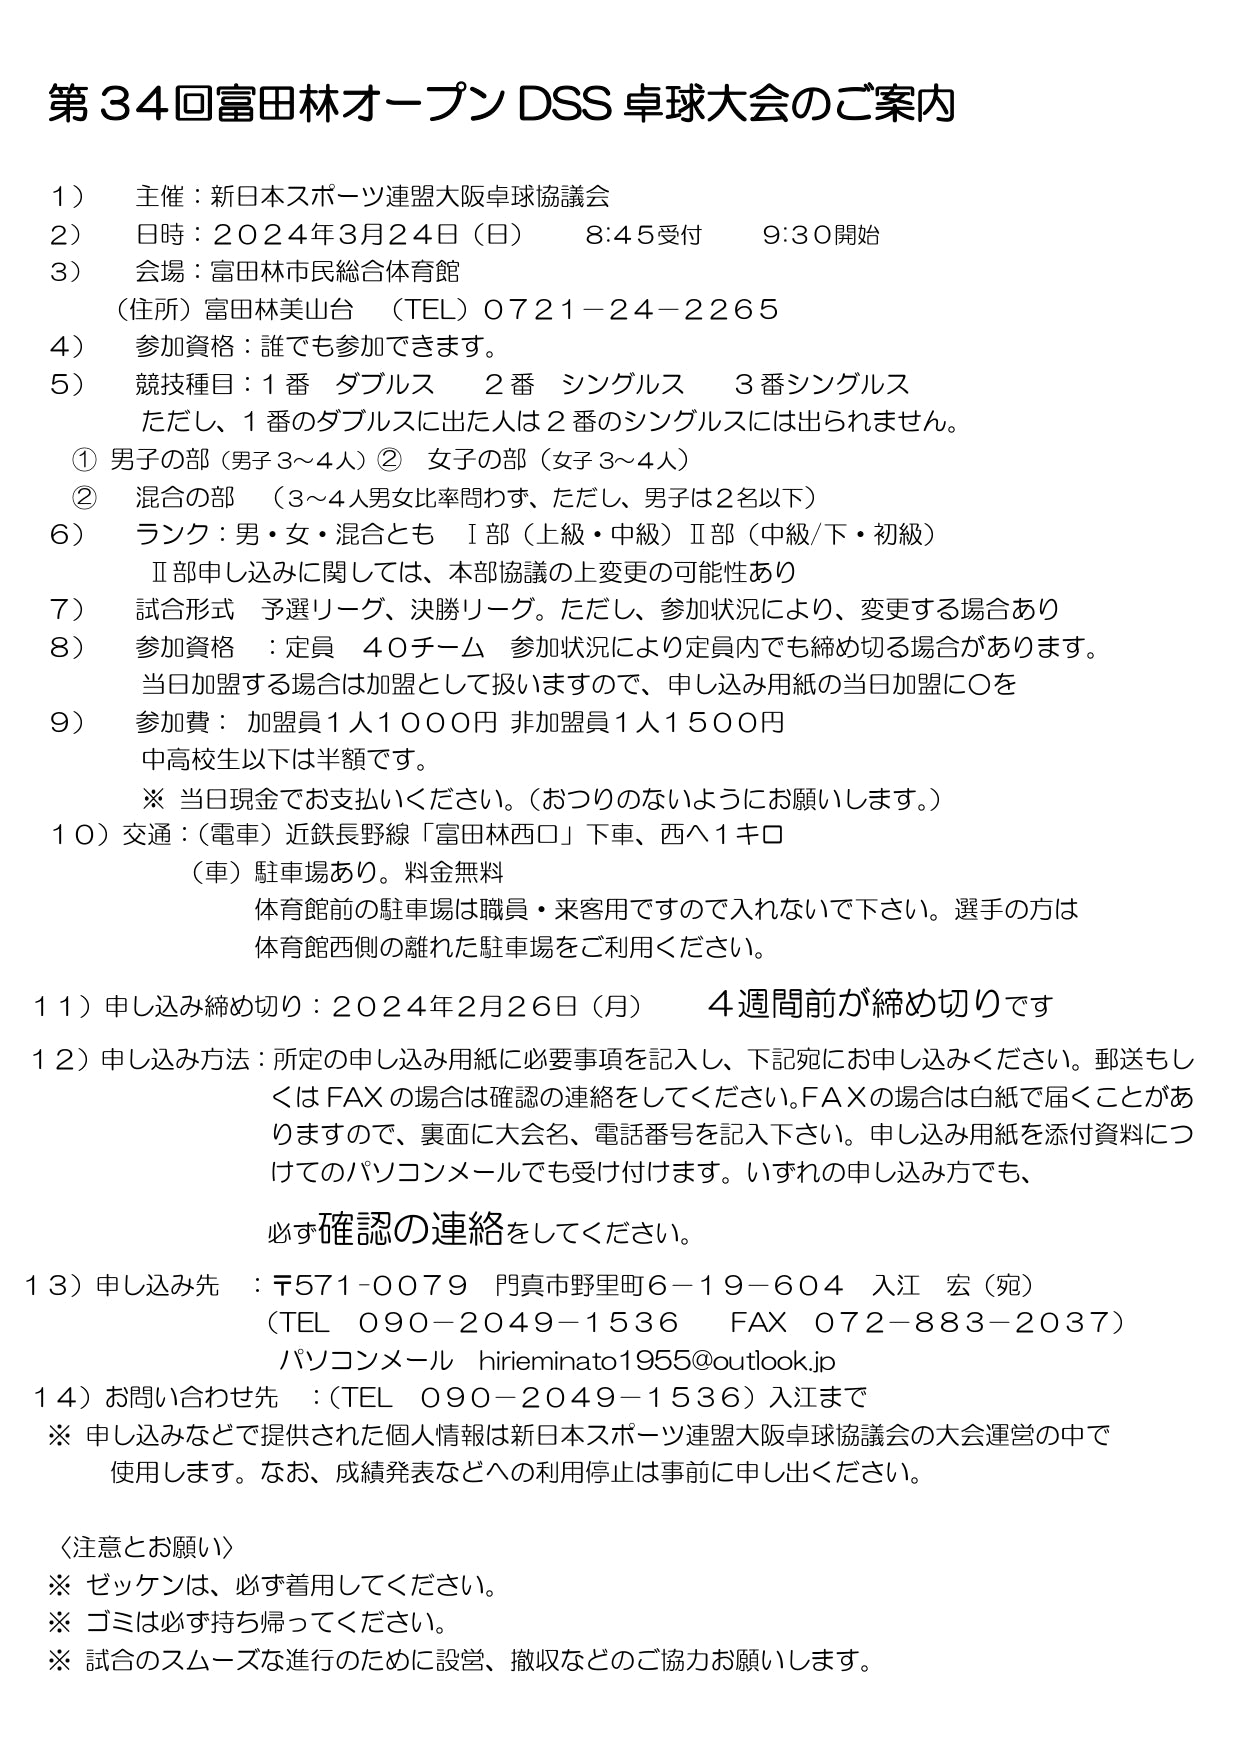 2024/03/24 第34回富田林オープンDSS卓球大会